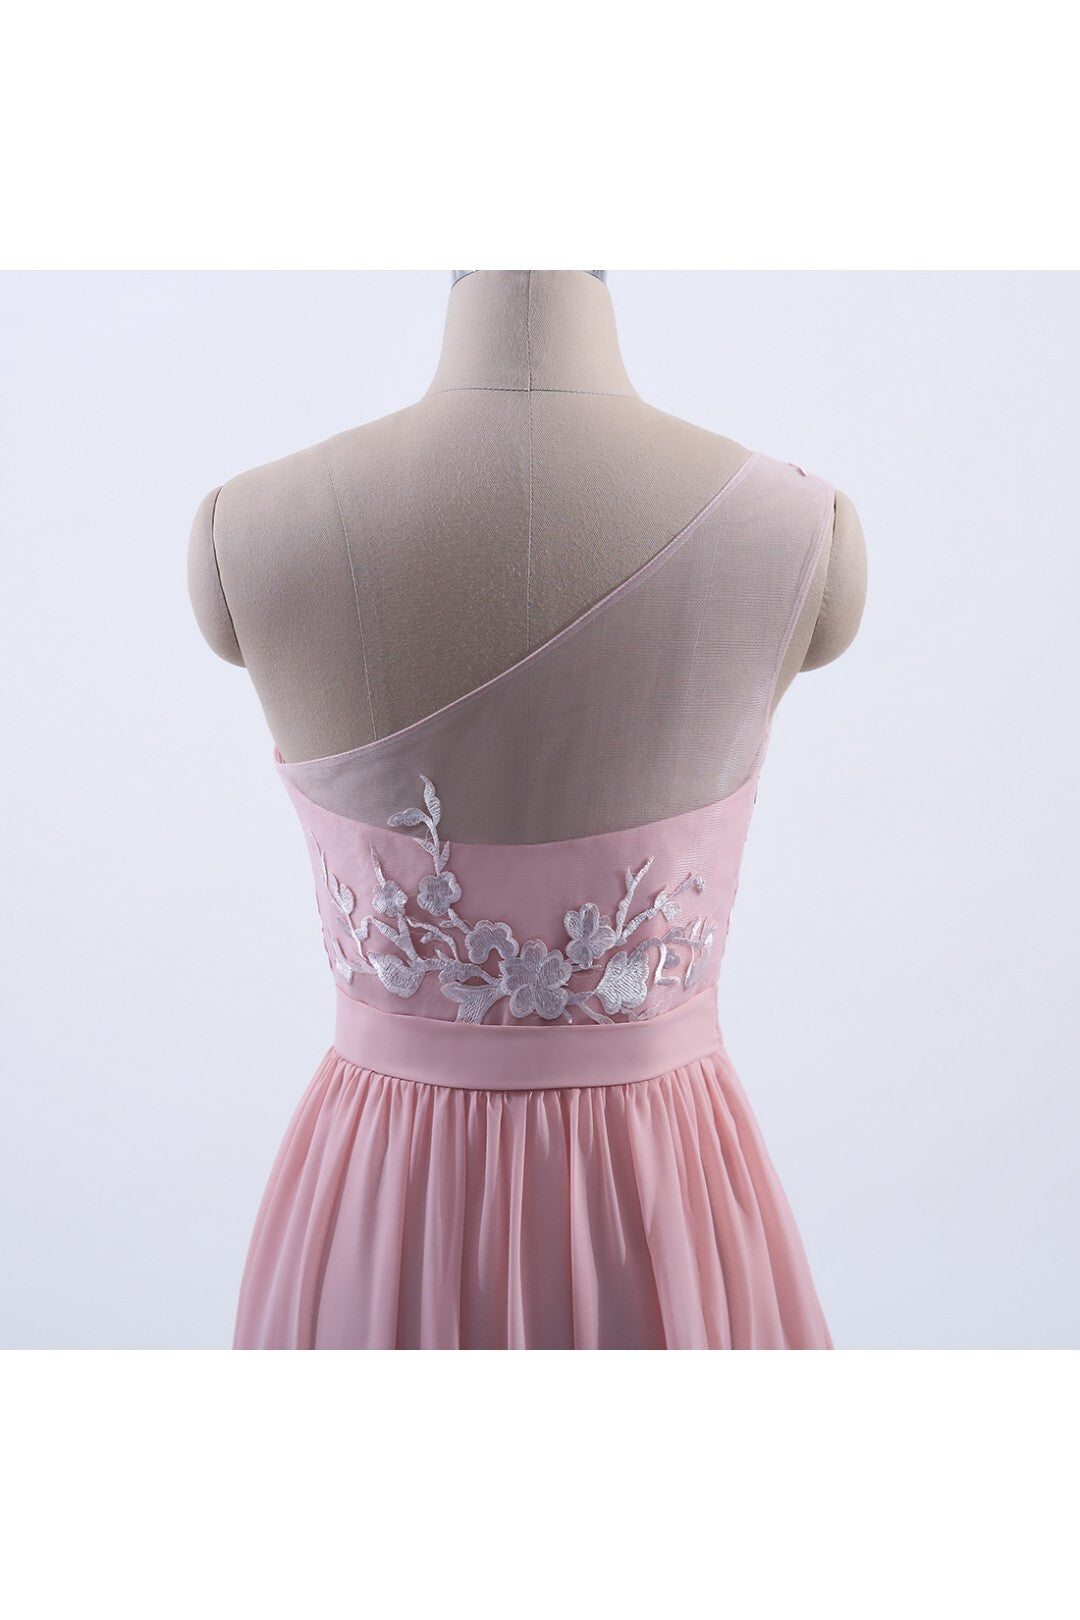 Pink One Shoulder Chiffon A-line Appliques Long Bridesmaid Dress